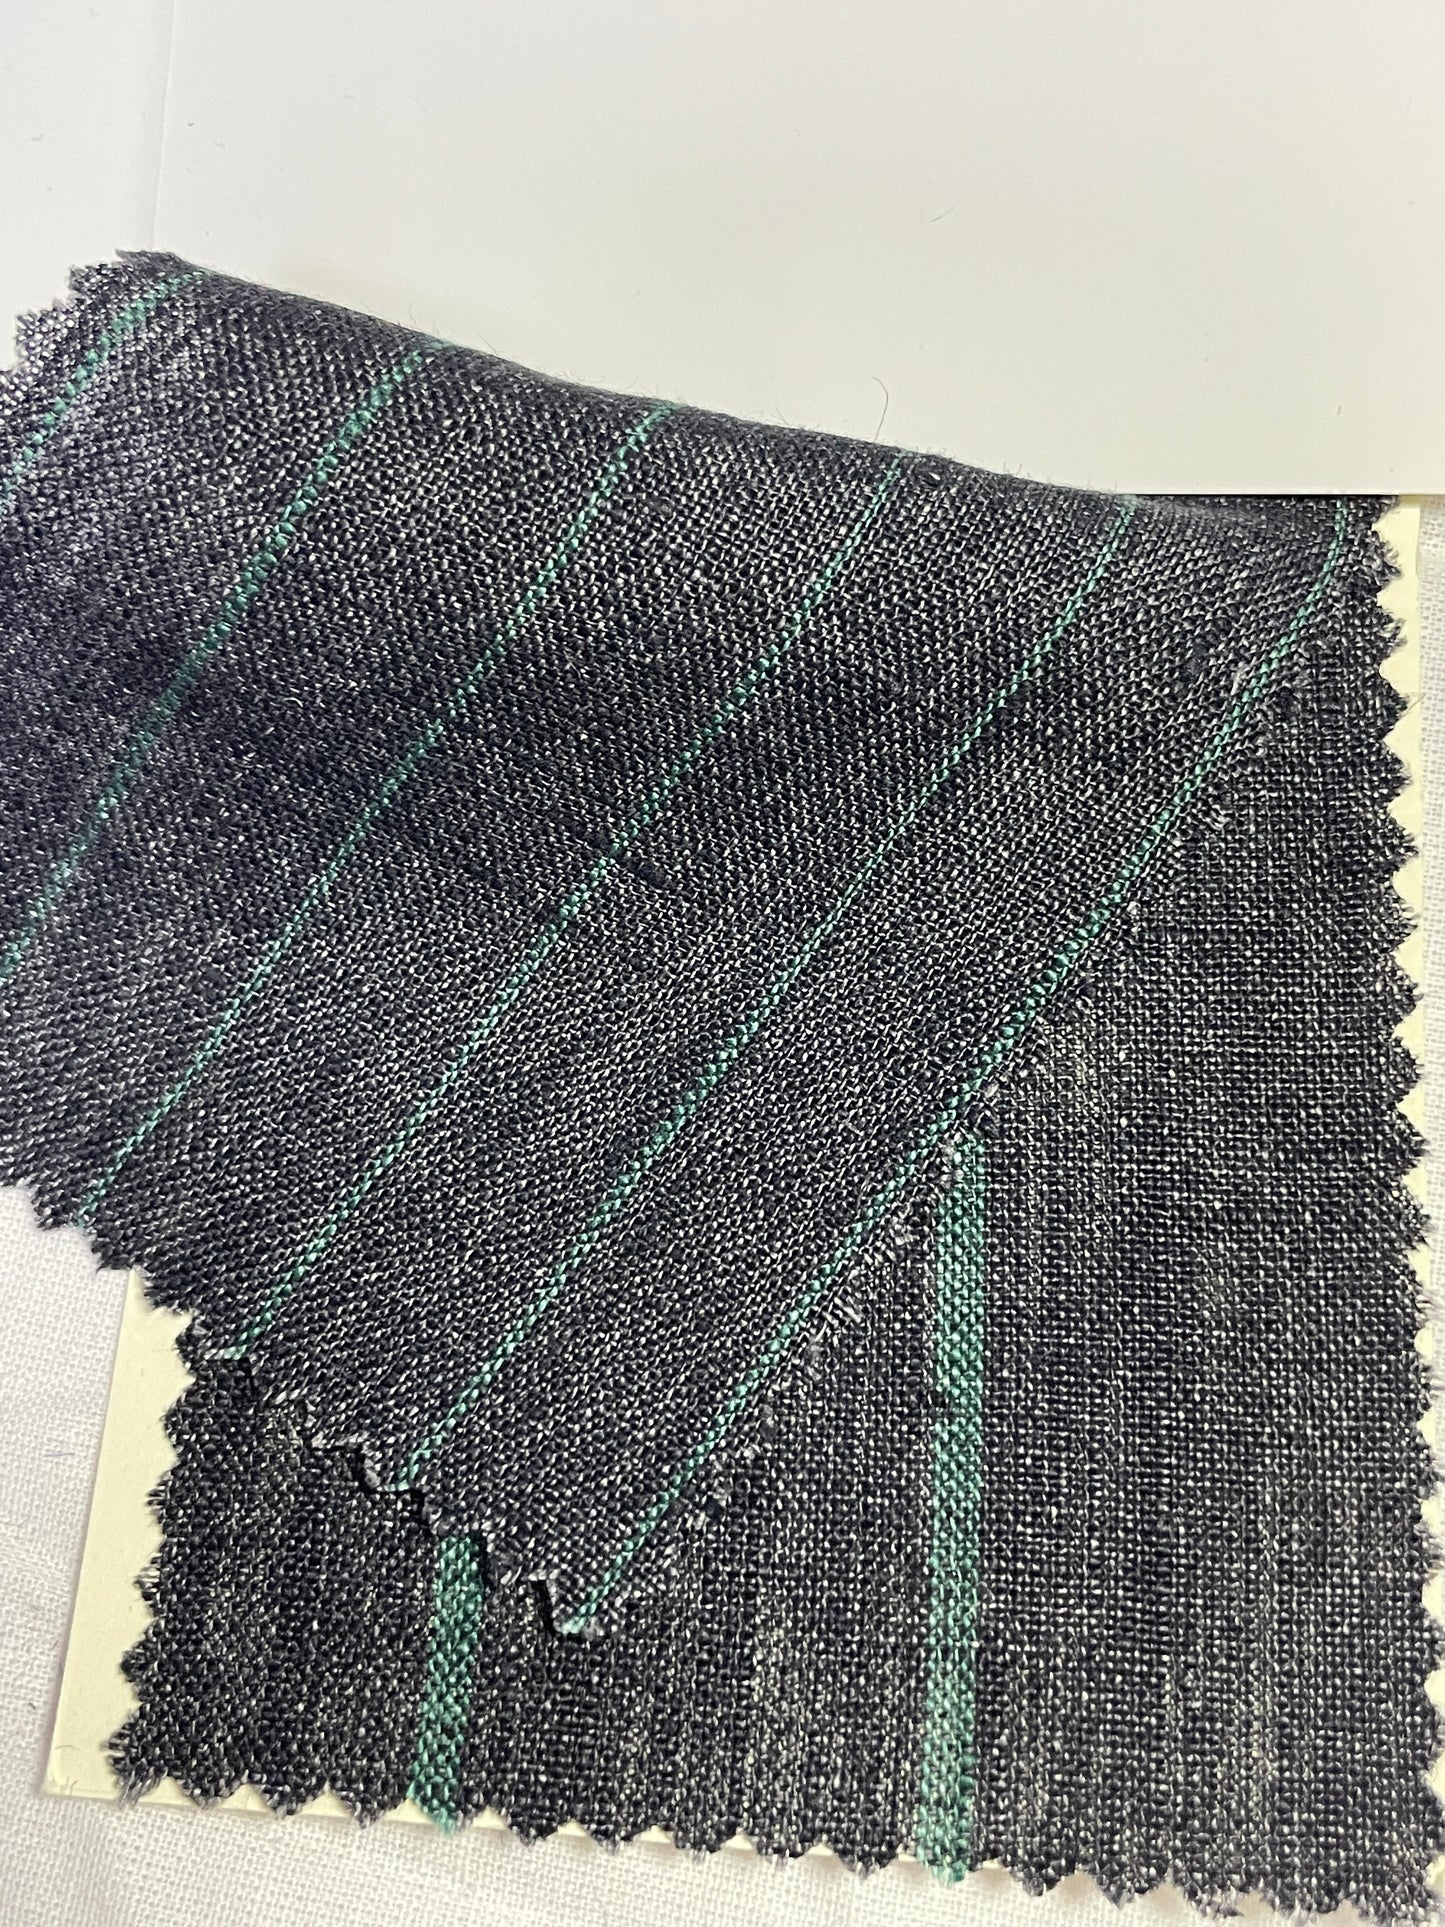 New Yarn-Dyed Stripe Linen Fabric - Natasha Fabric